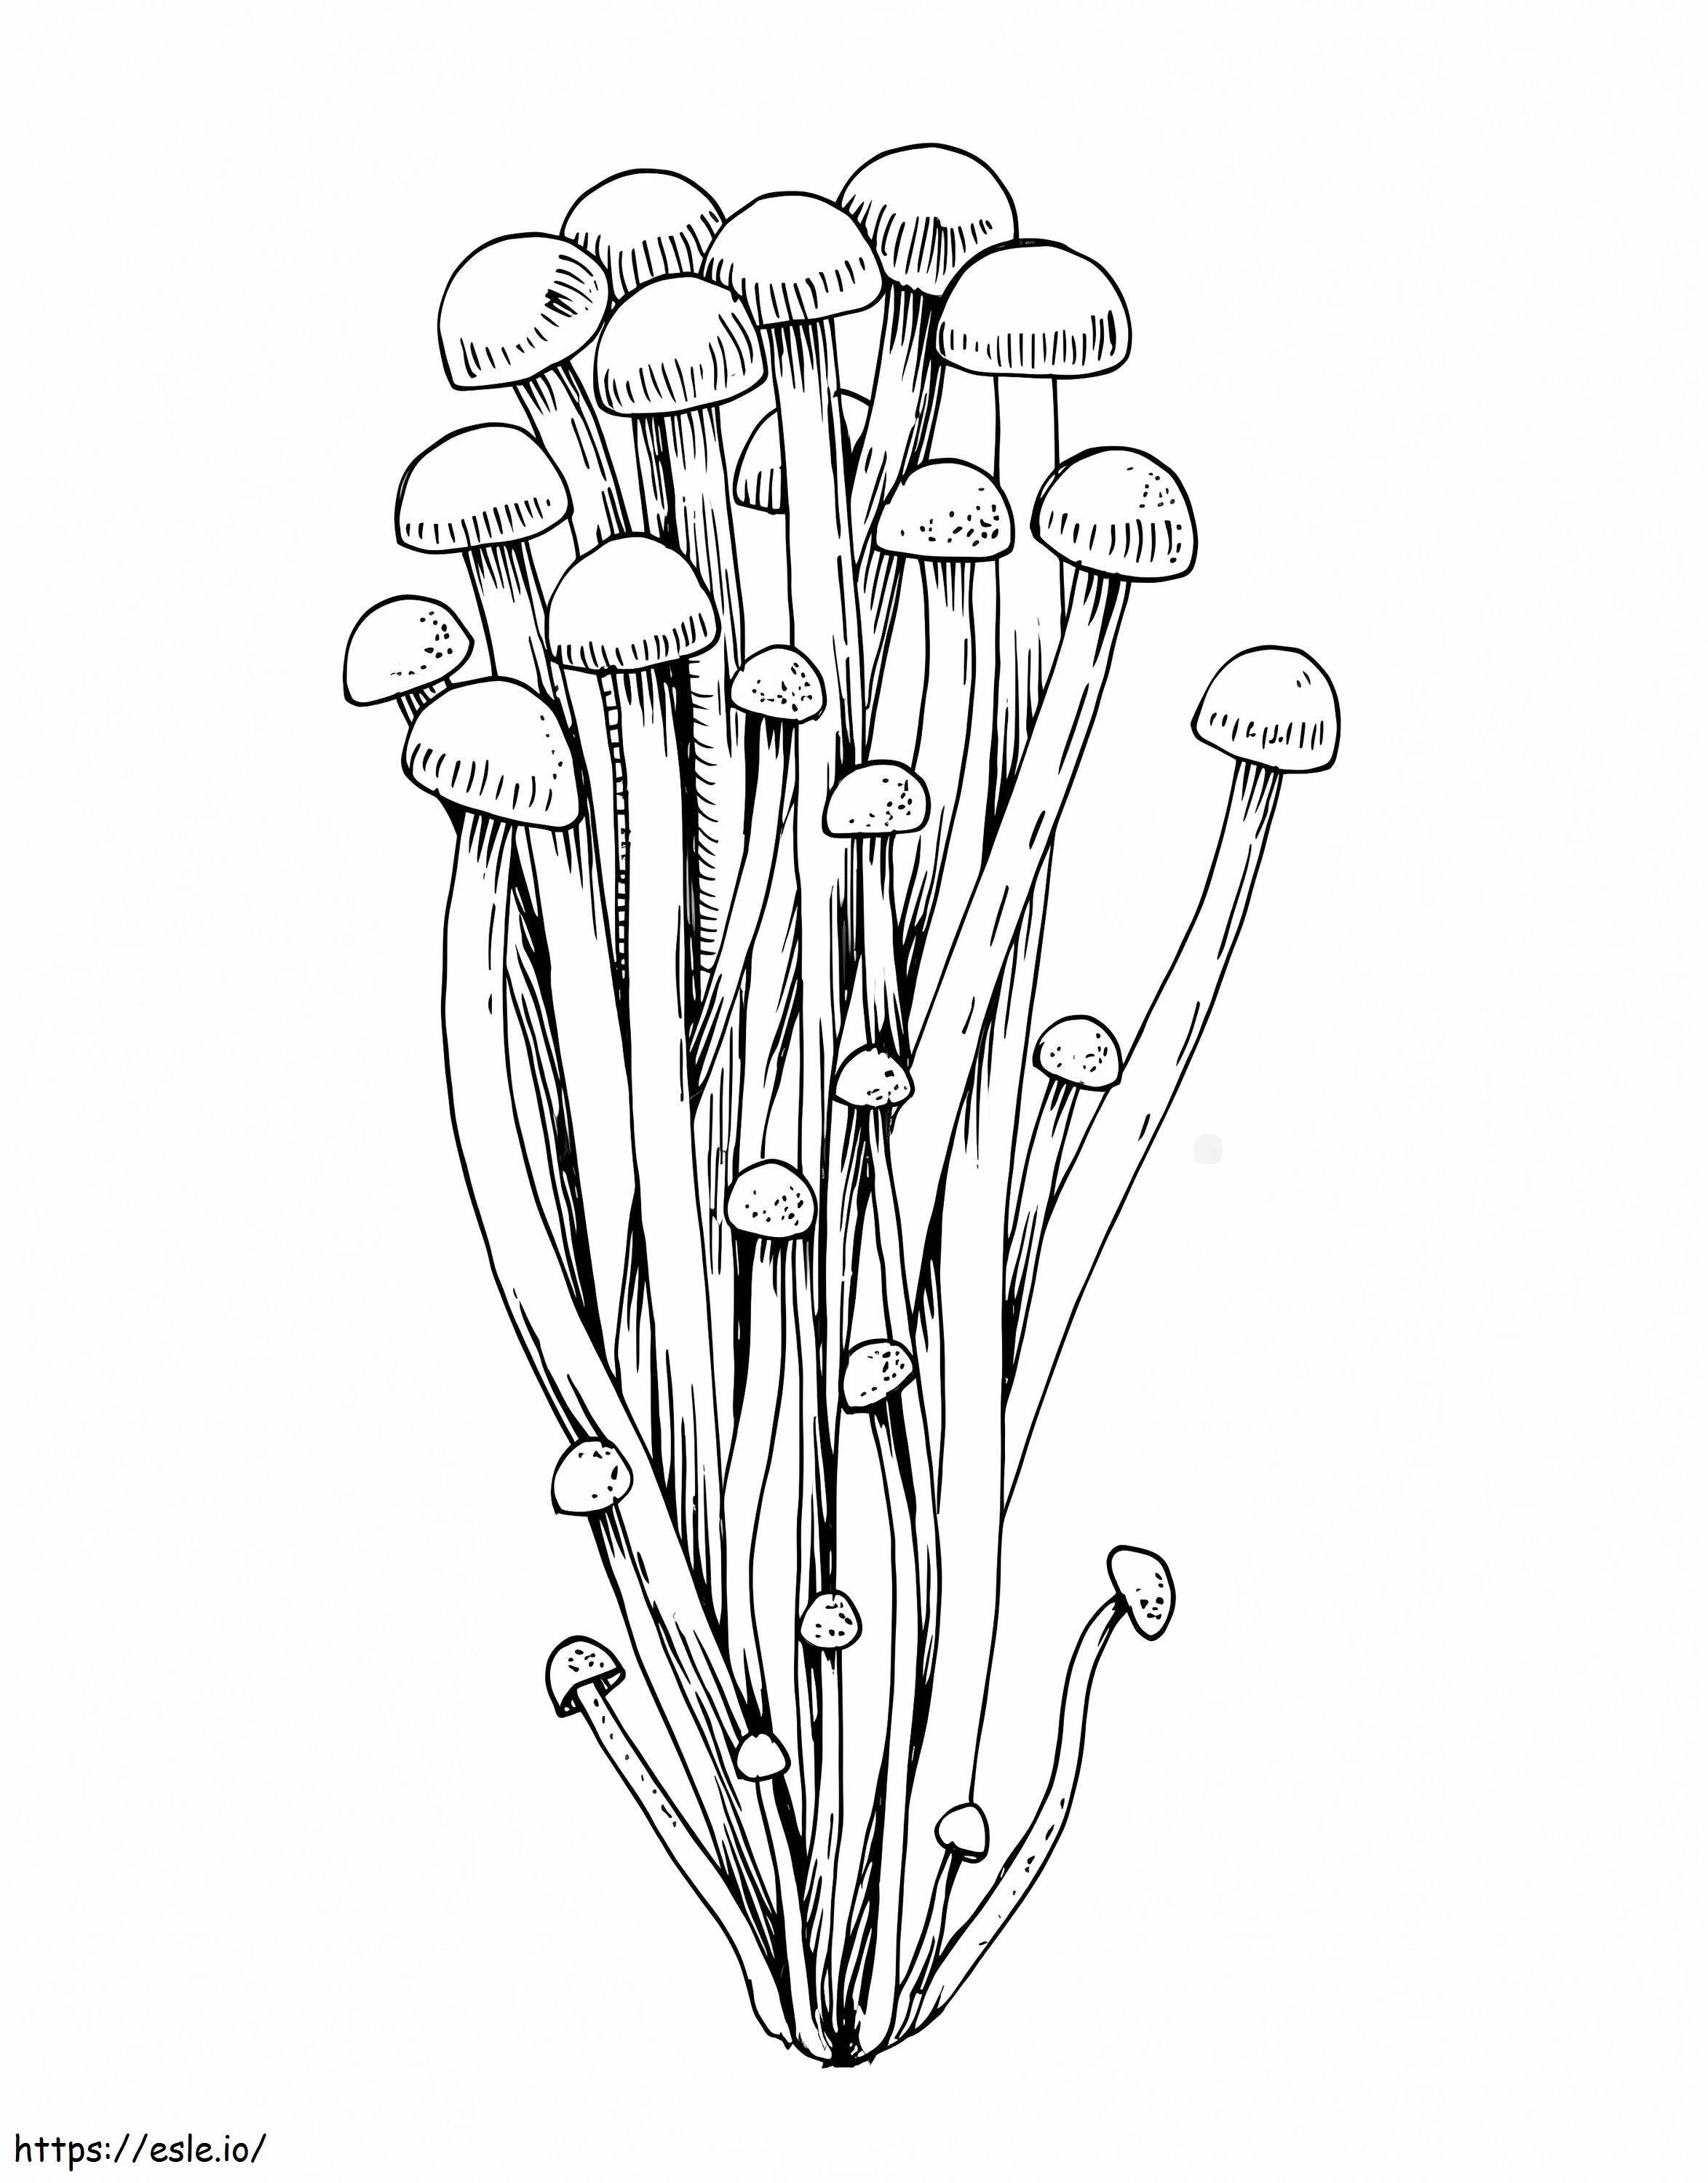 Mushrooms 8 coloring page